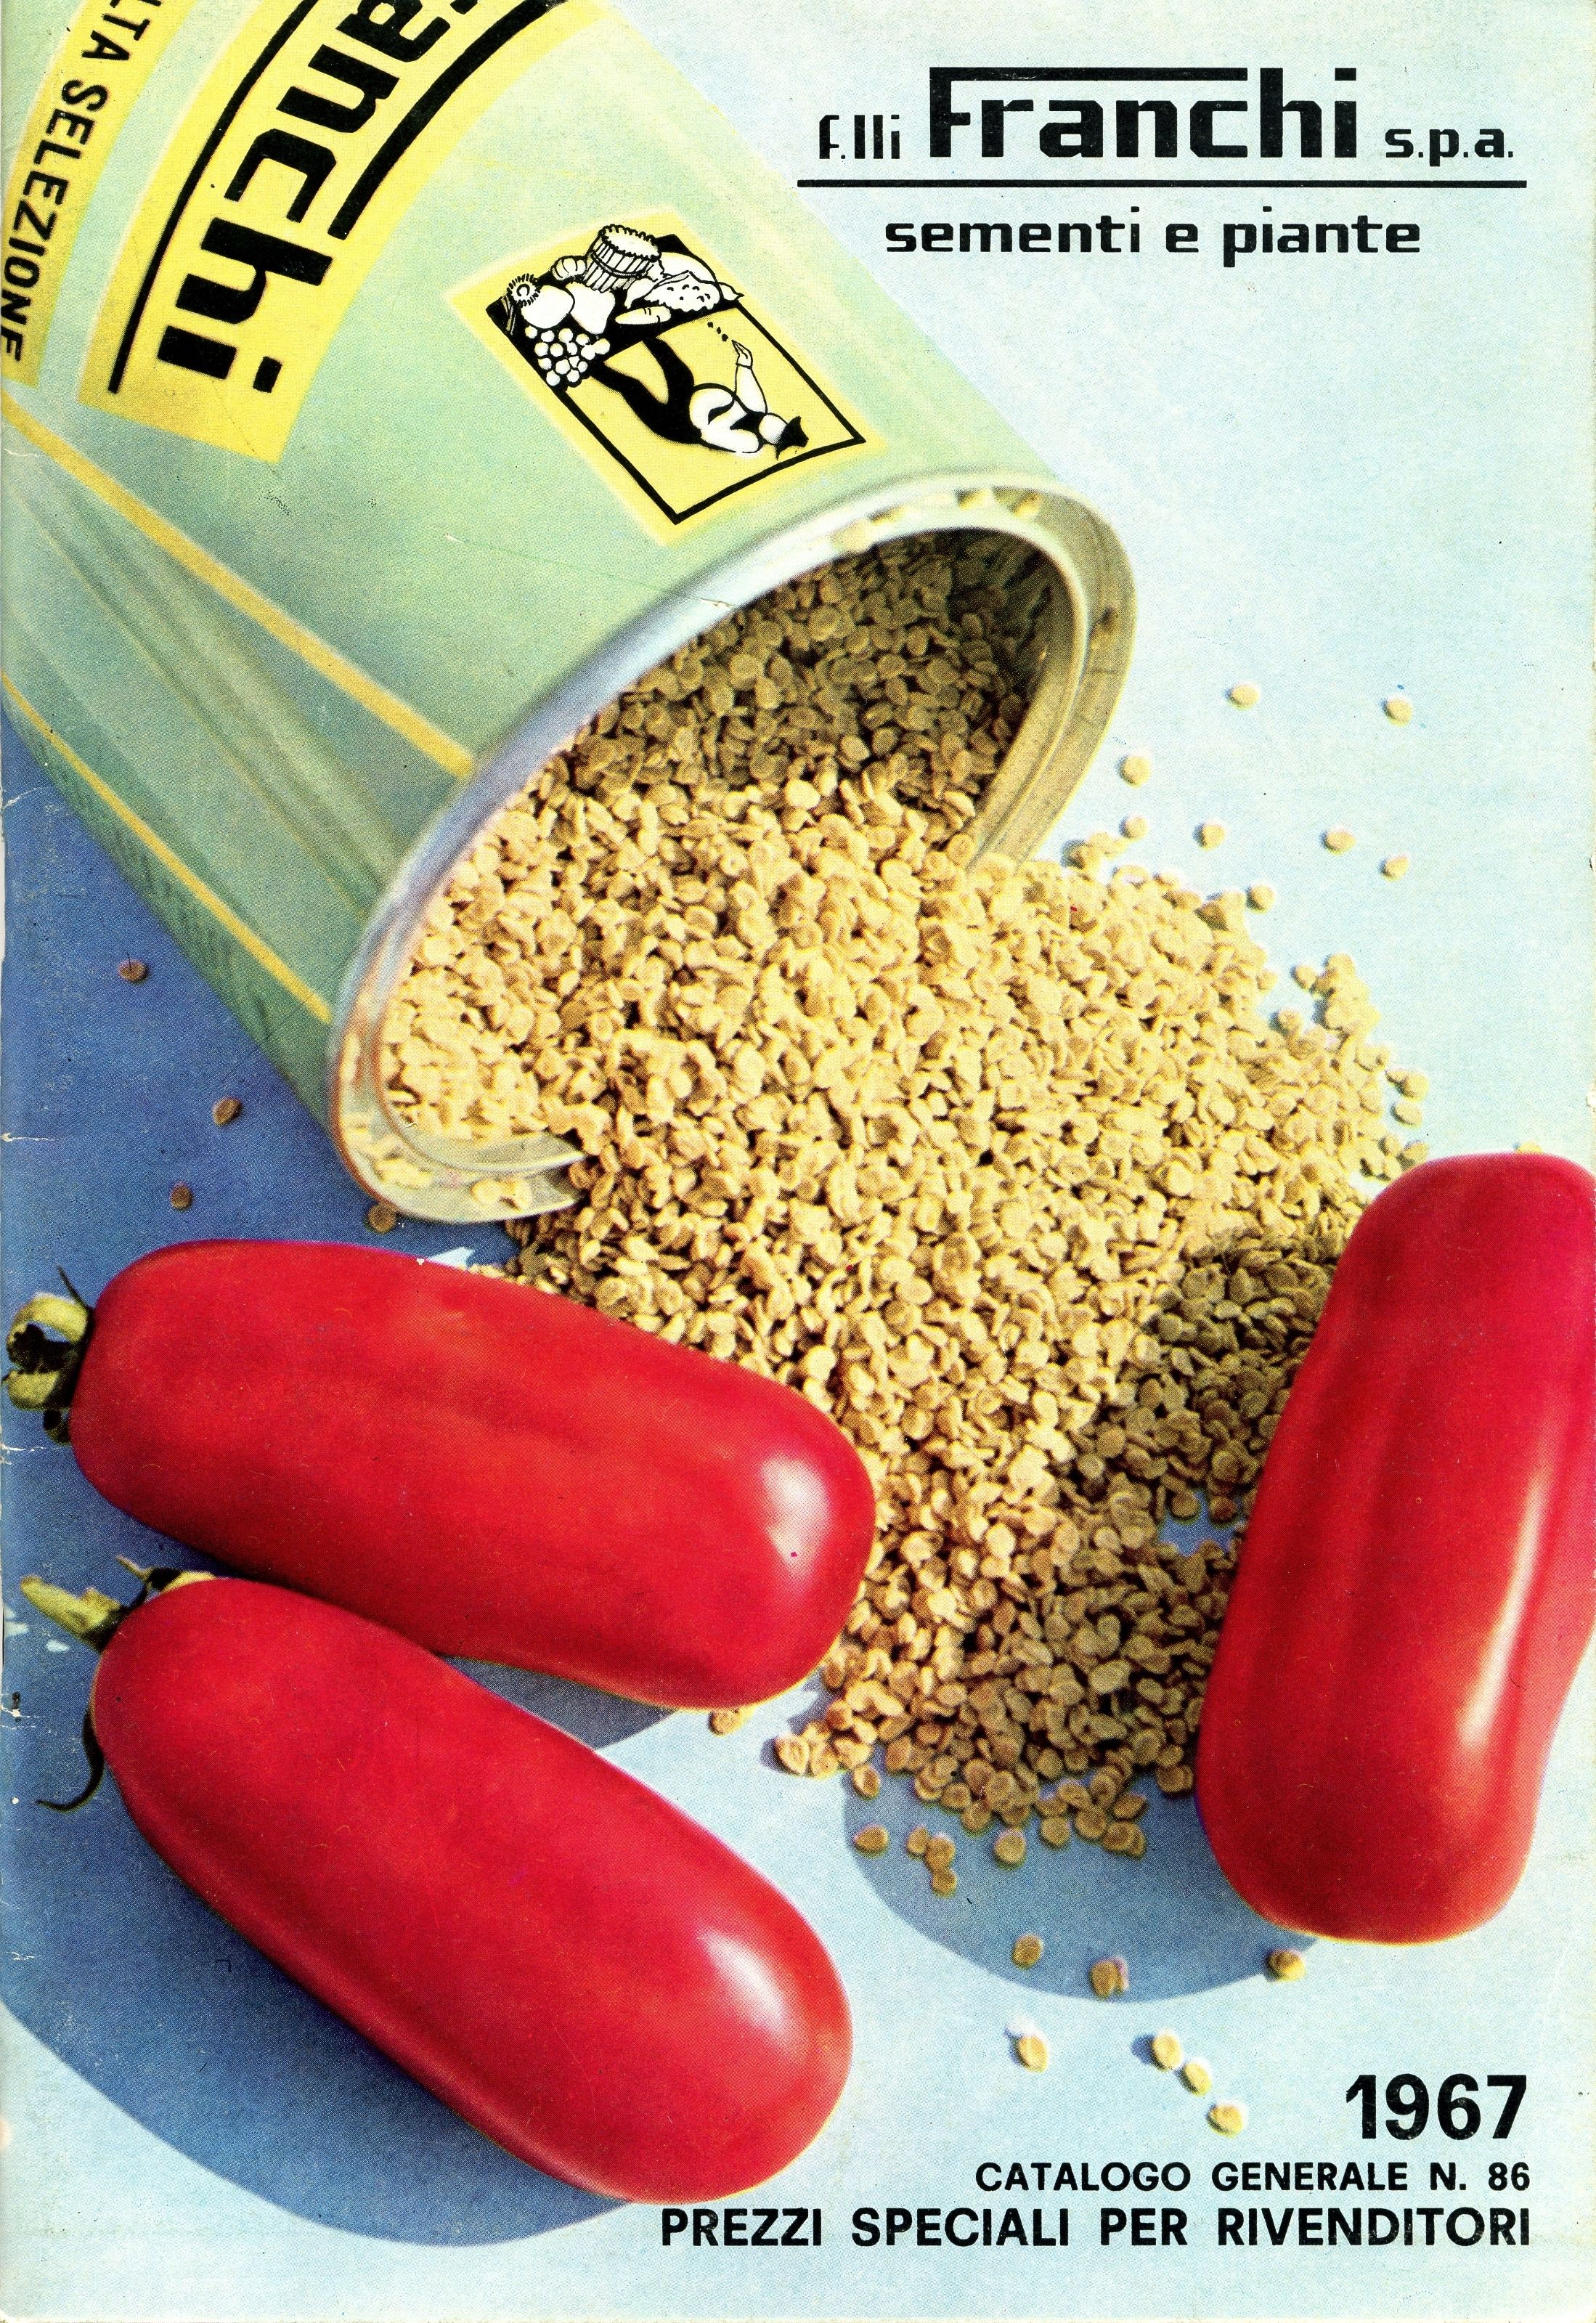 Seeds of Italy Ltd